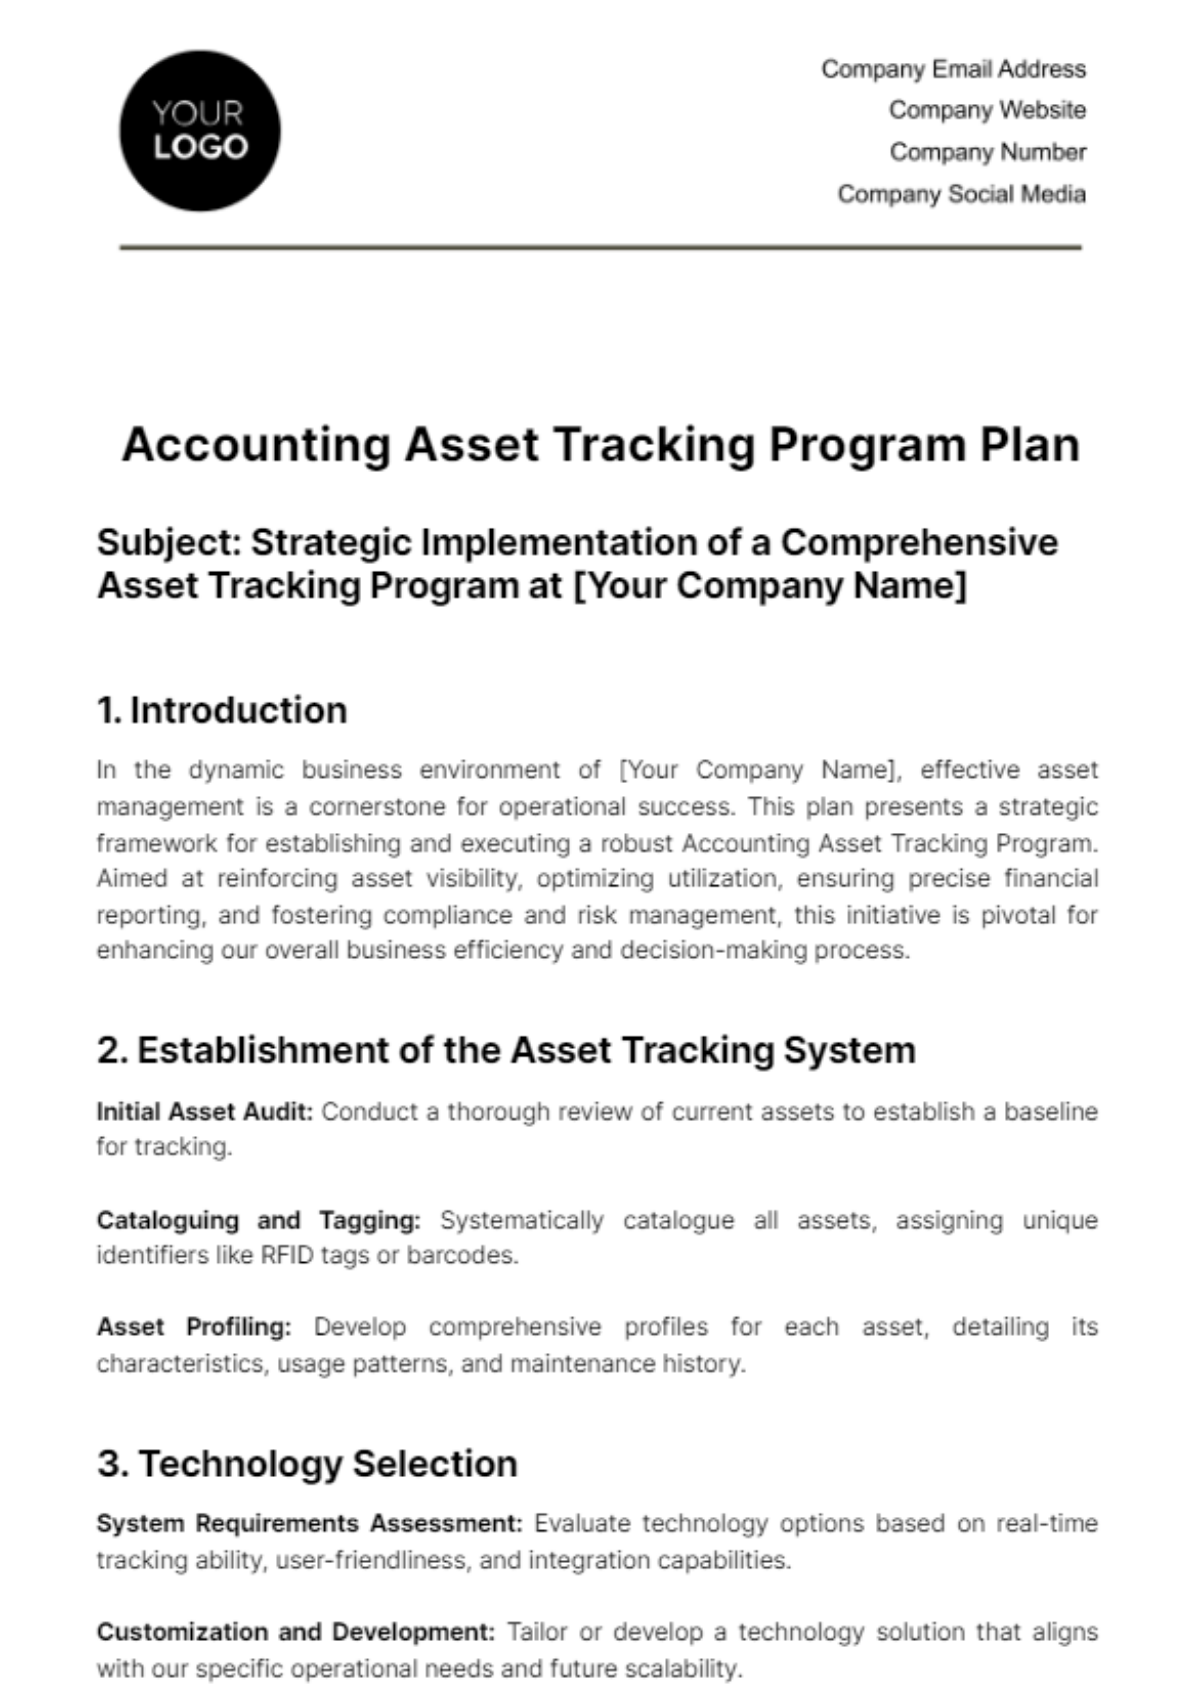 Free Accounting Asset Tracking Program Plan Template